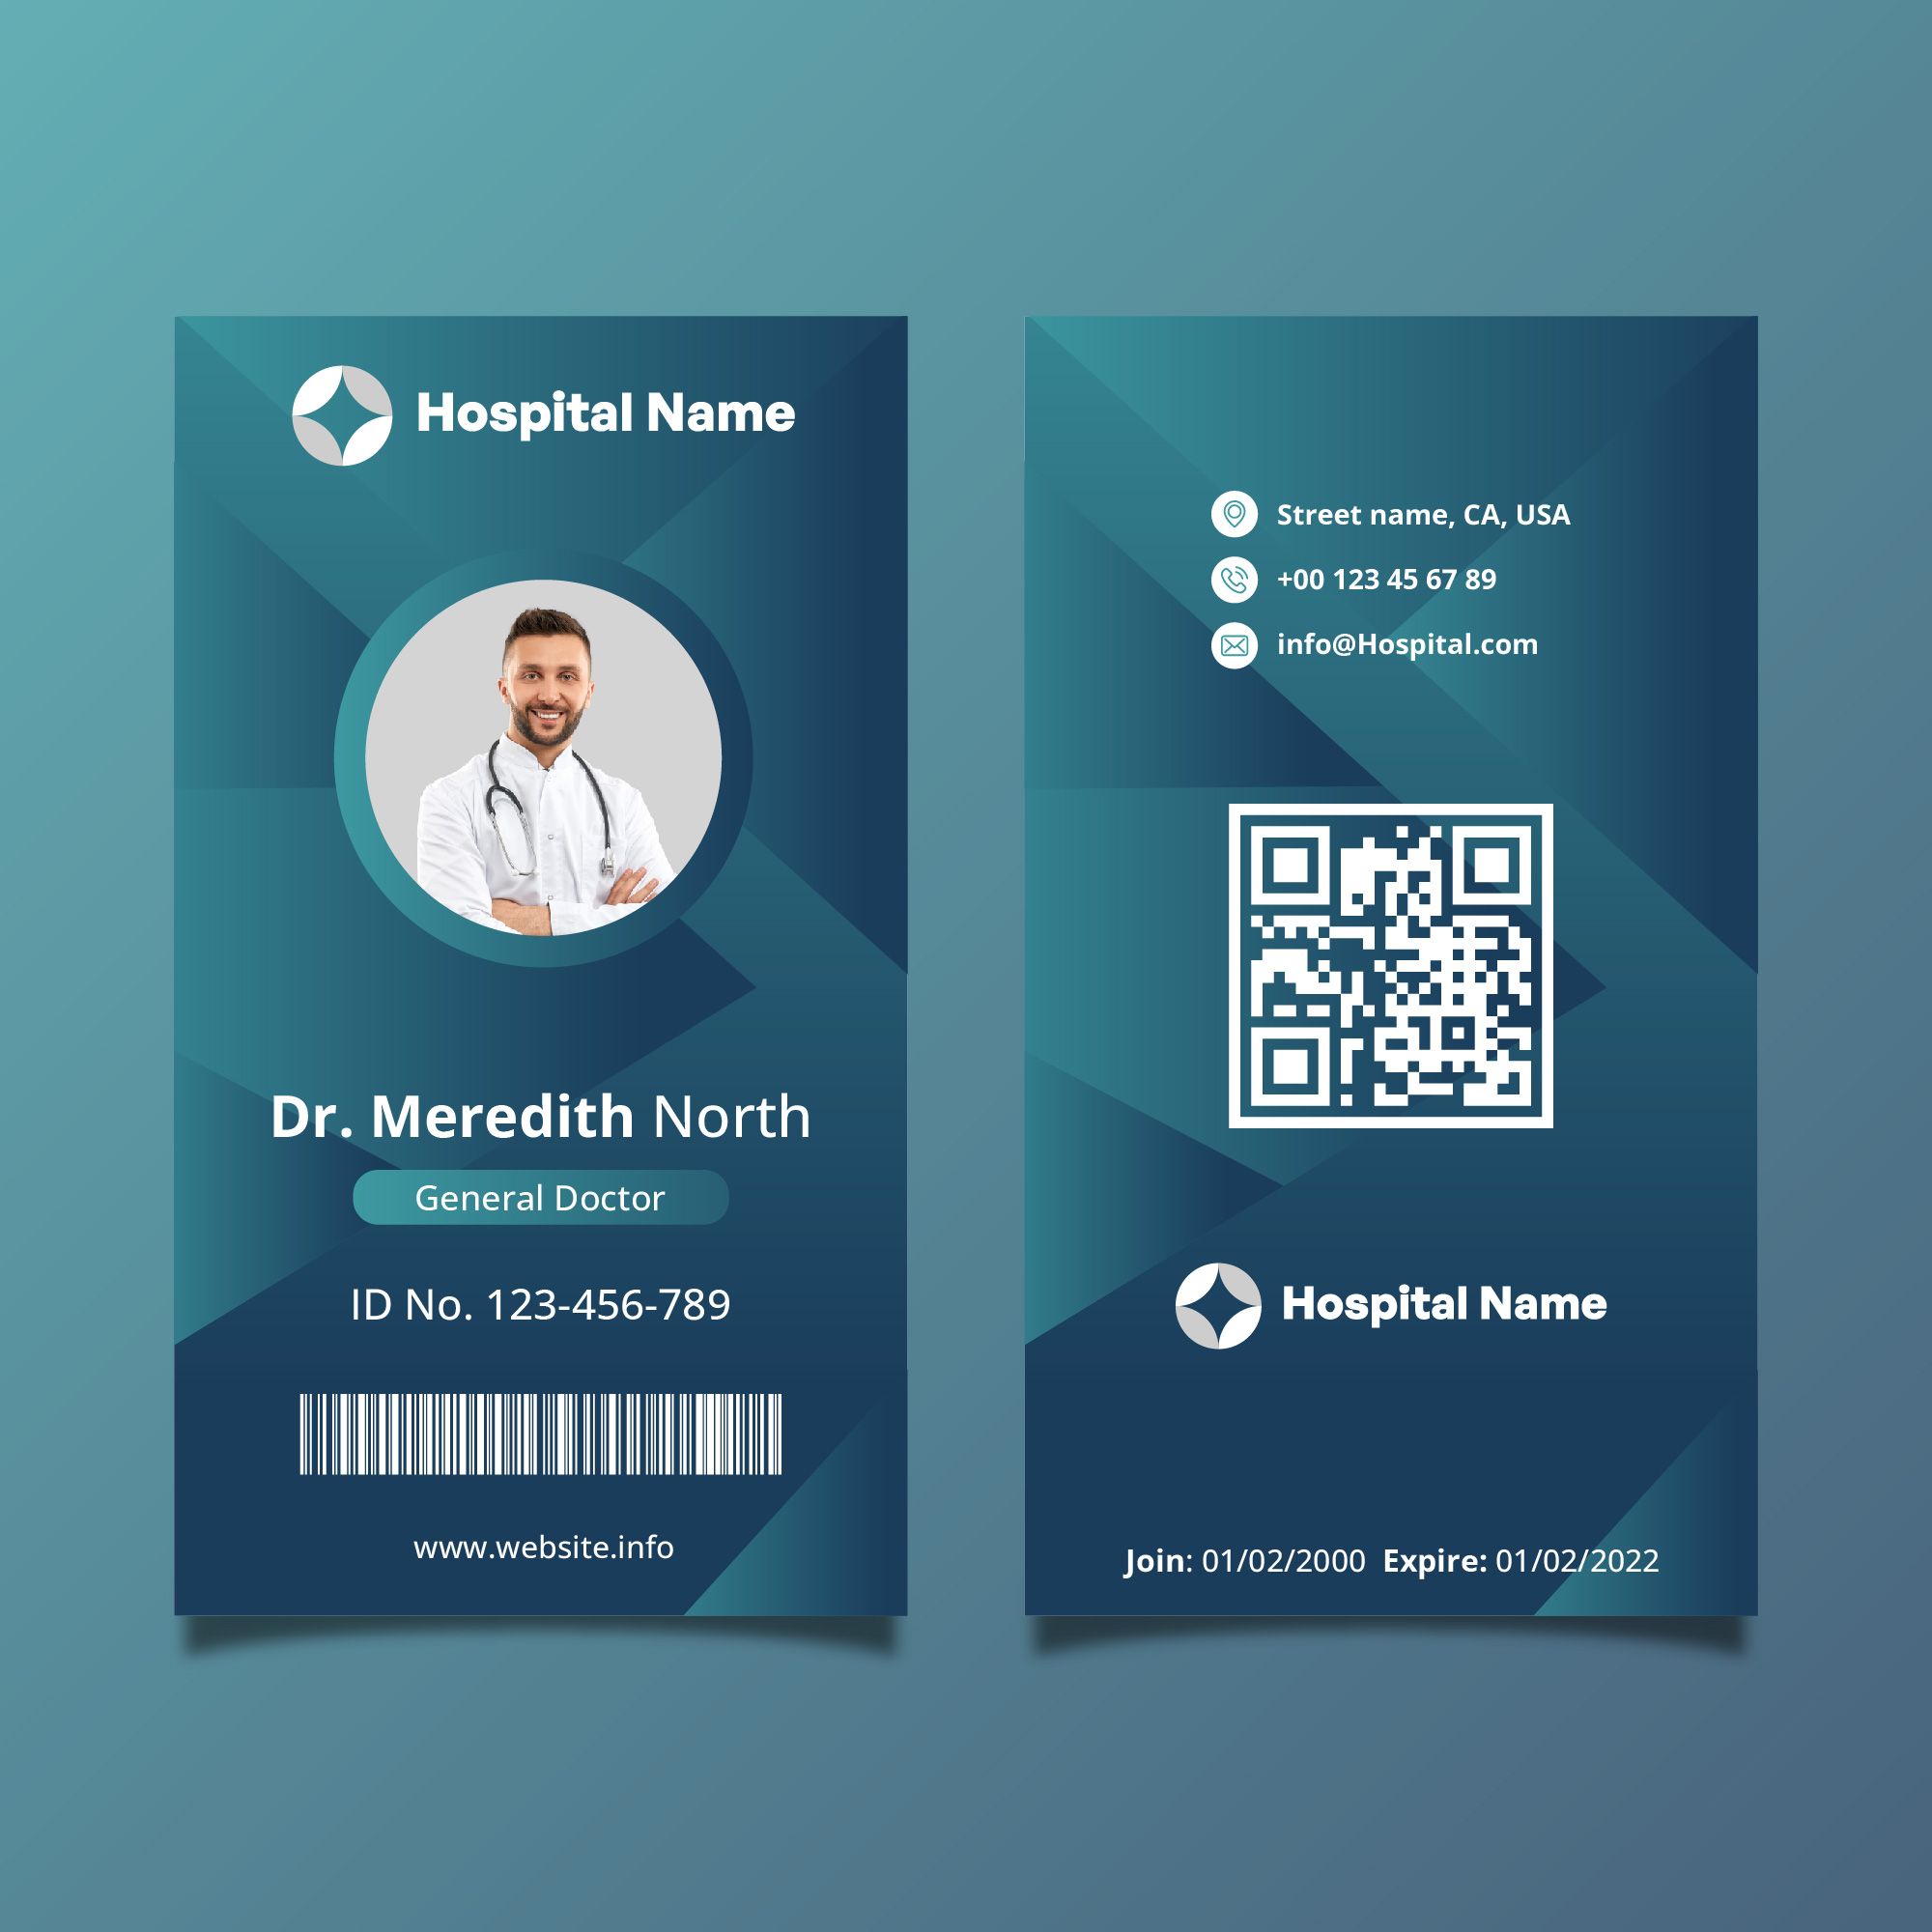 Medical ID Card Design Portfolios